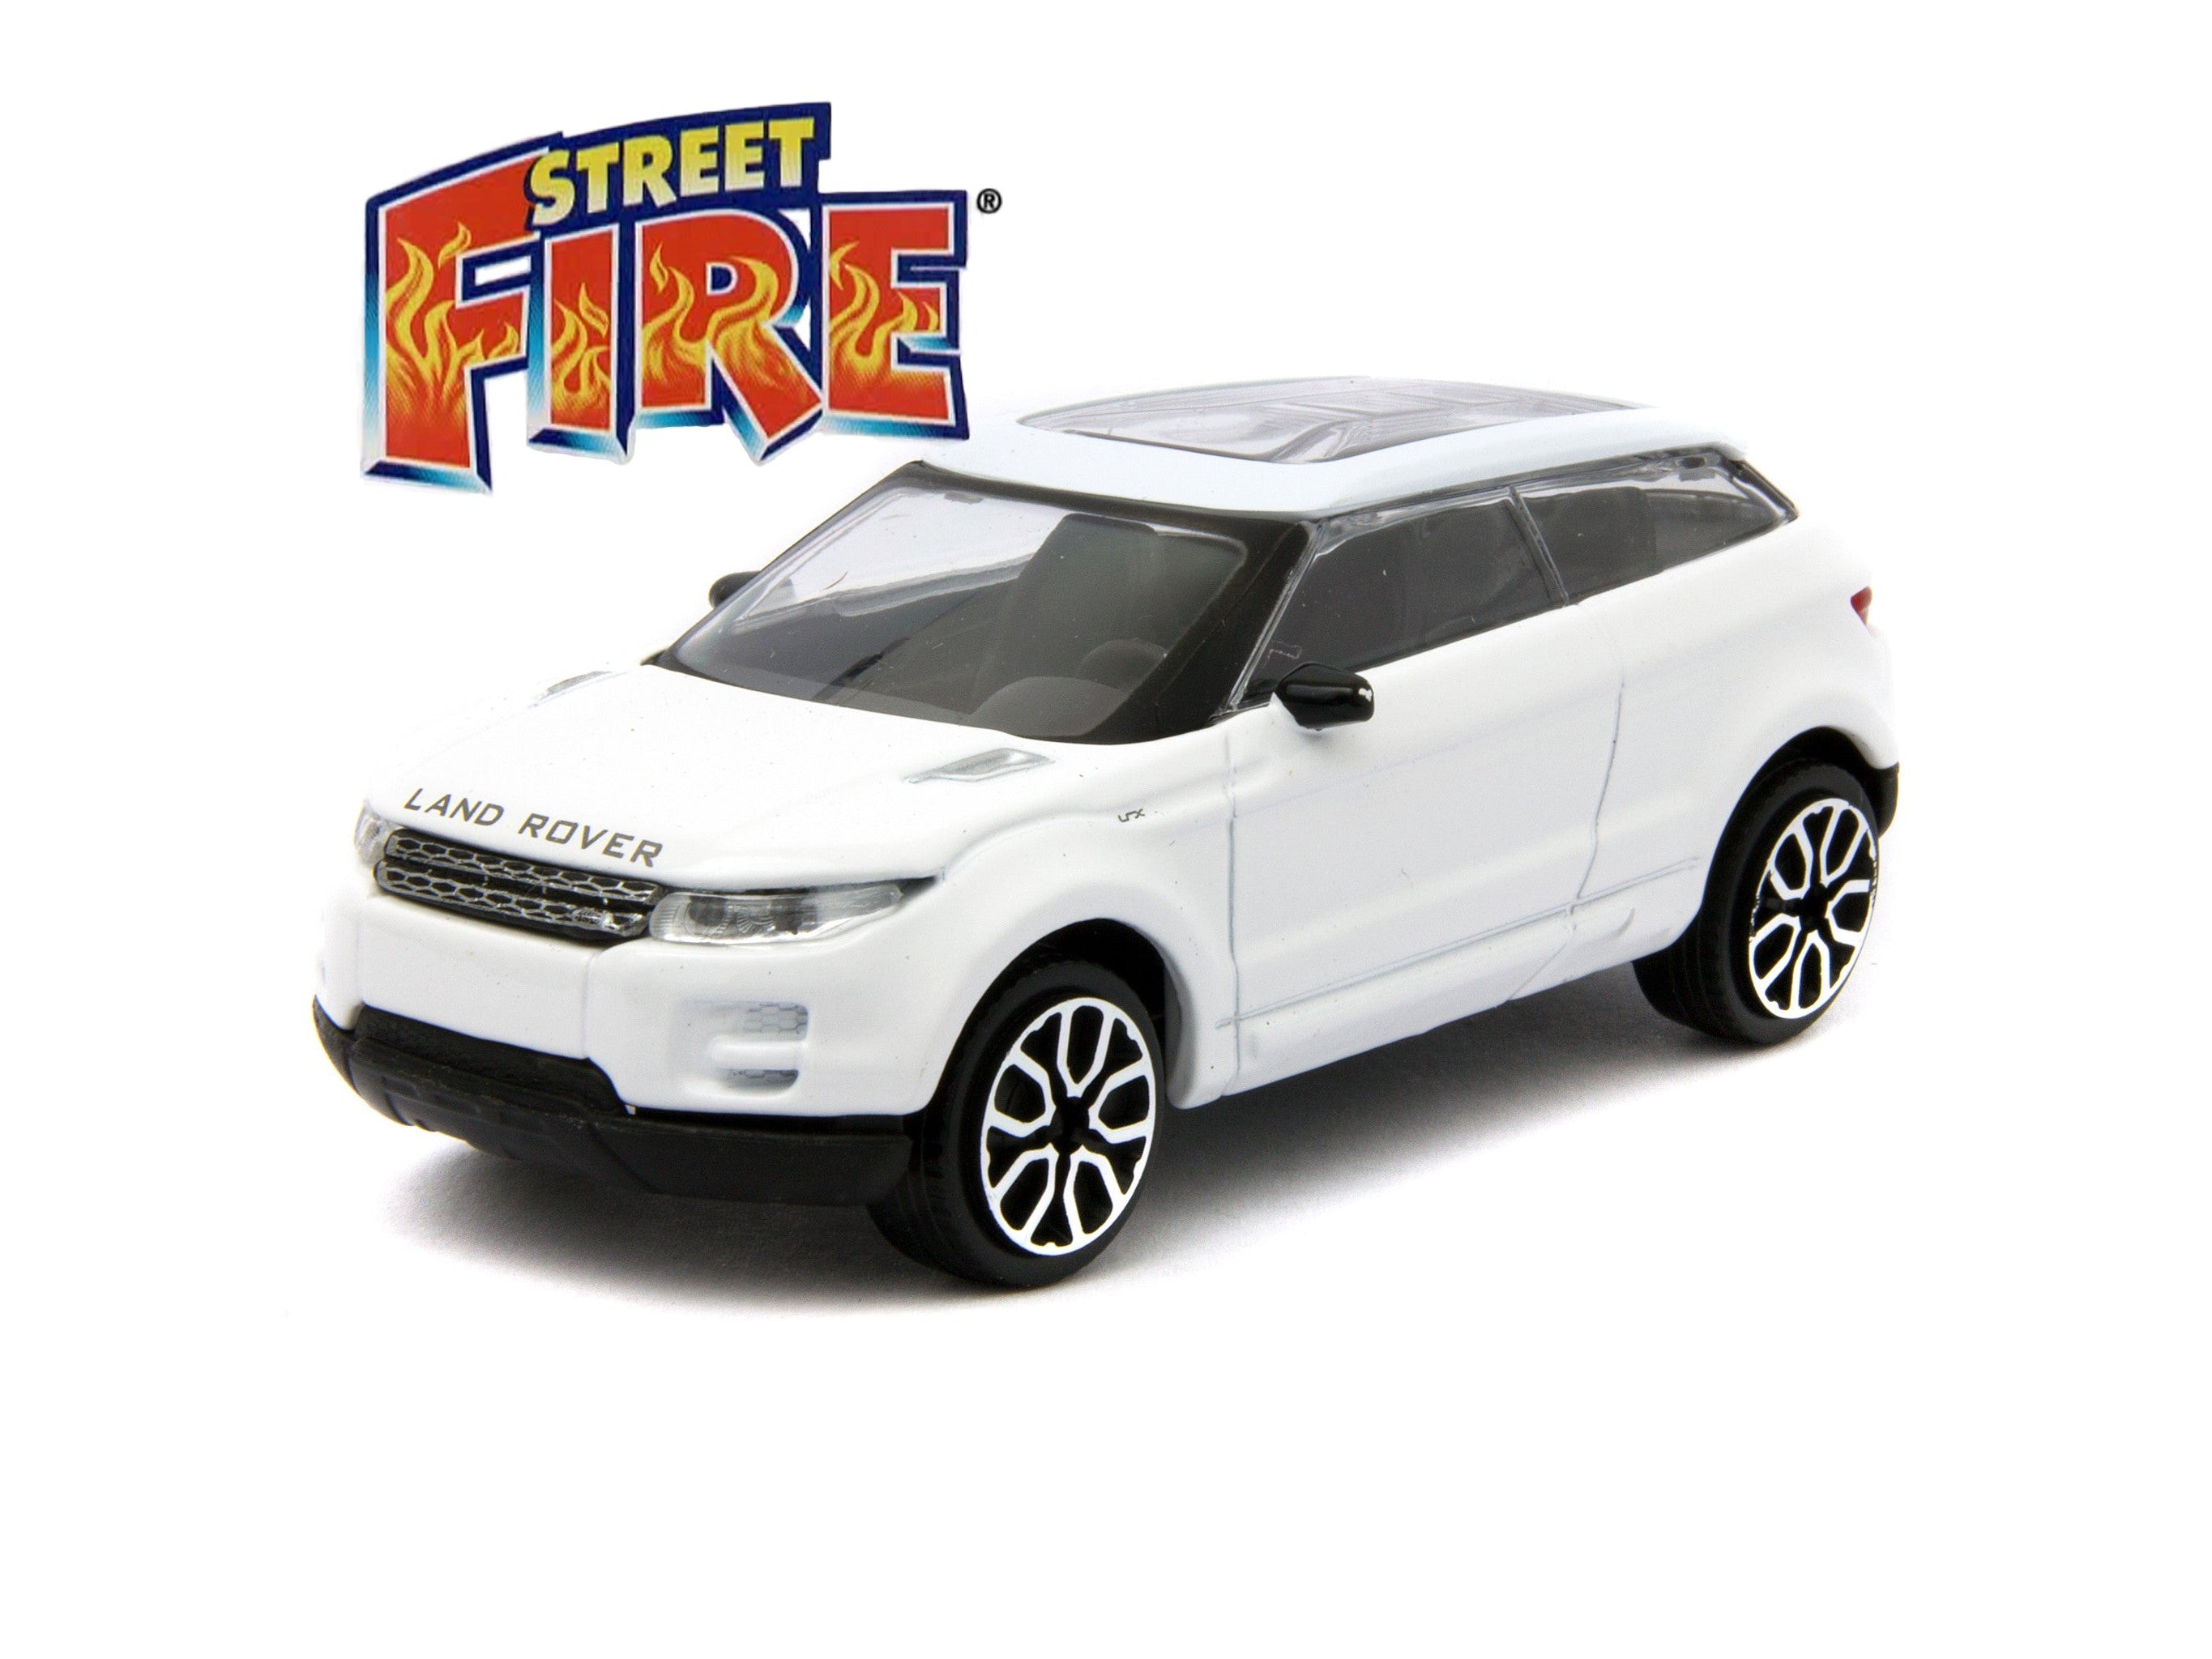 Land Rover LRX Concept (Evoque) Diecast Toy Car white - 1:43 Scale